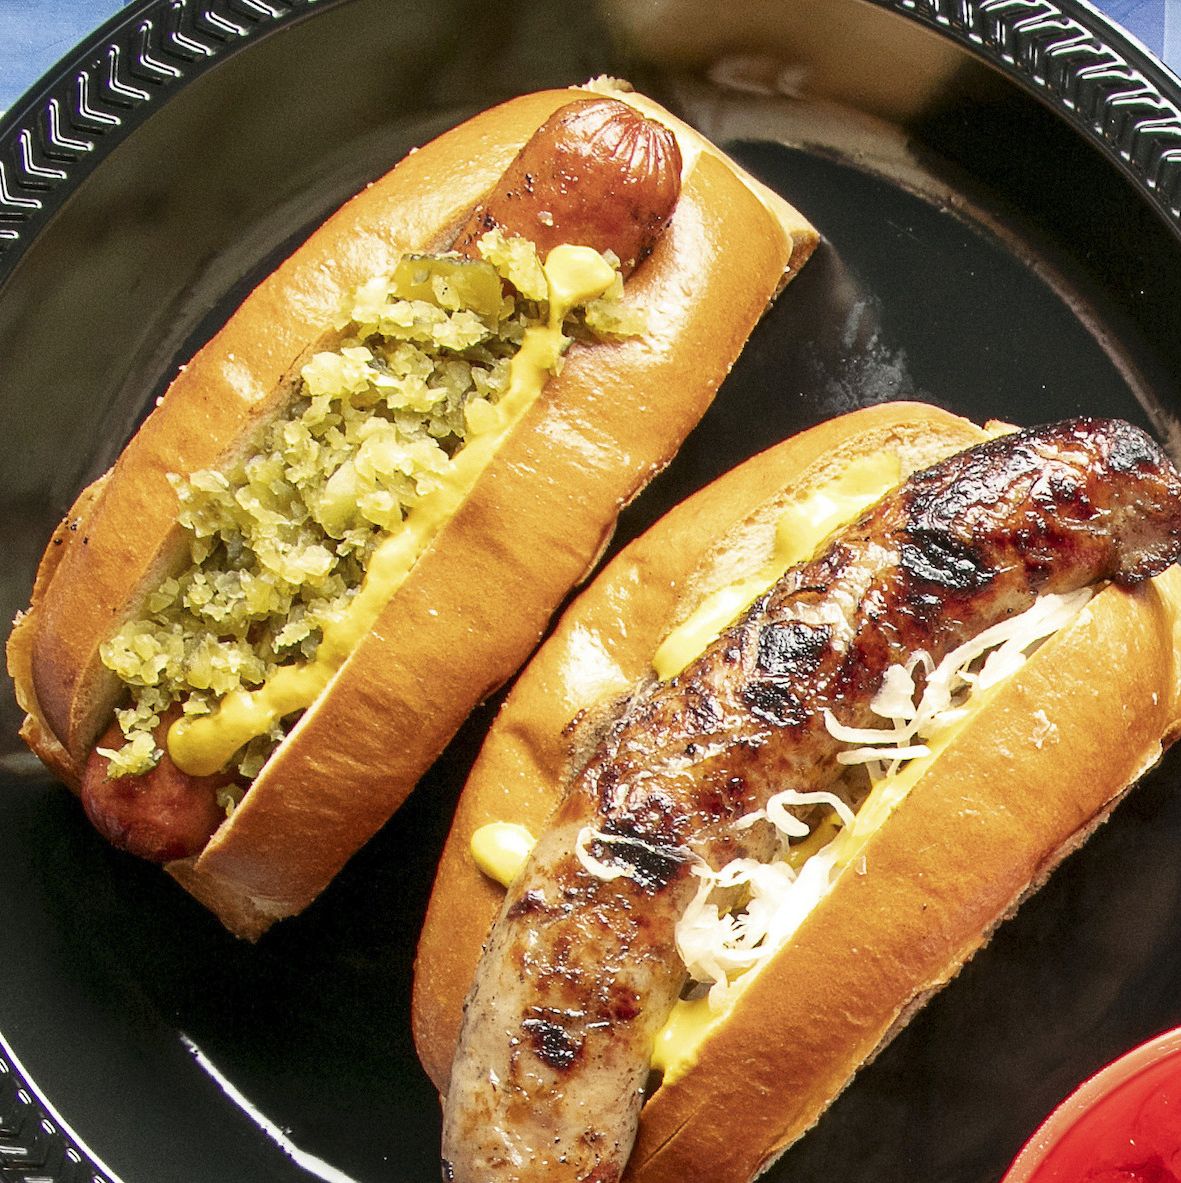 https://hips.hearstapps.com/hmg-prod/images/hot-dogs-bratwurst-sauerkraut-relish-1617121927.jpg?crop=0.737xw:0.740xh;0.167xw,0.0498xh&resize=1200:*